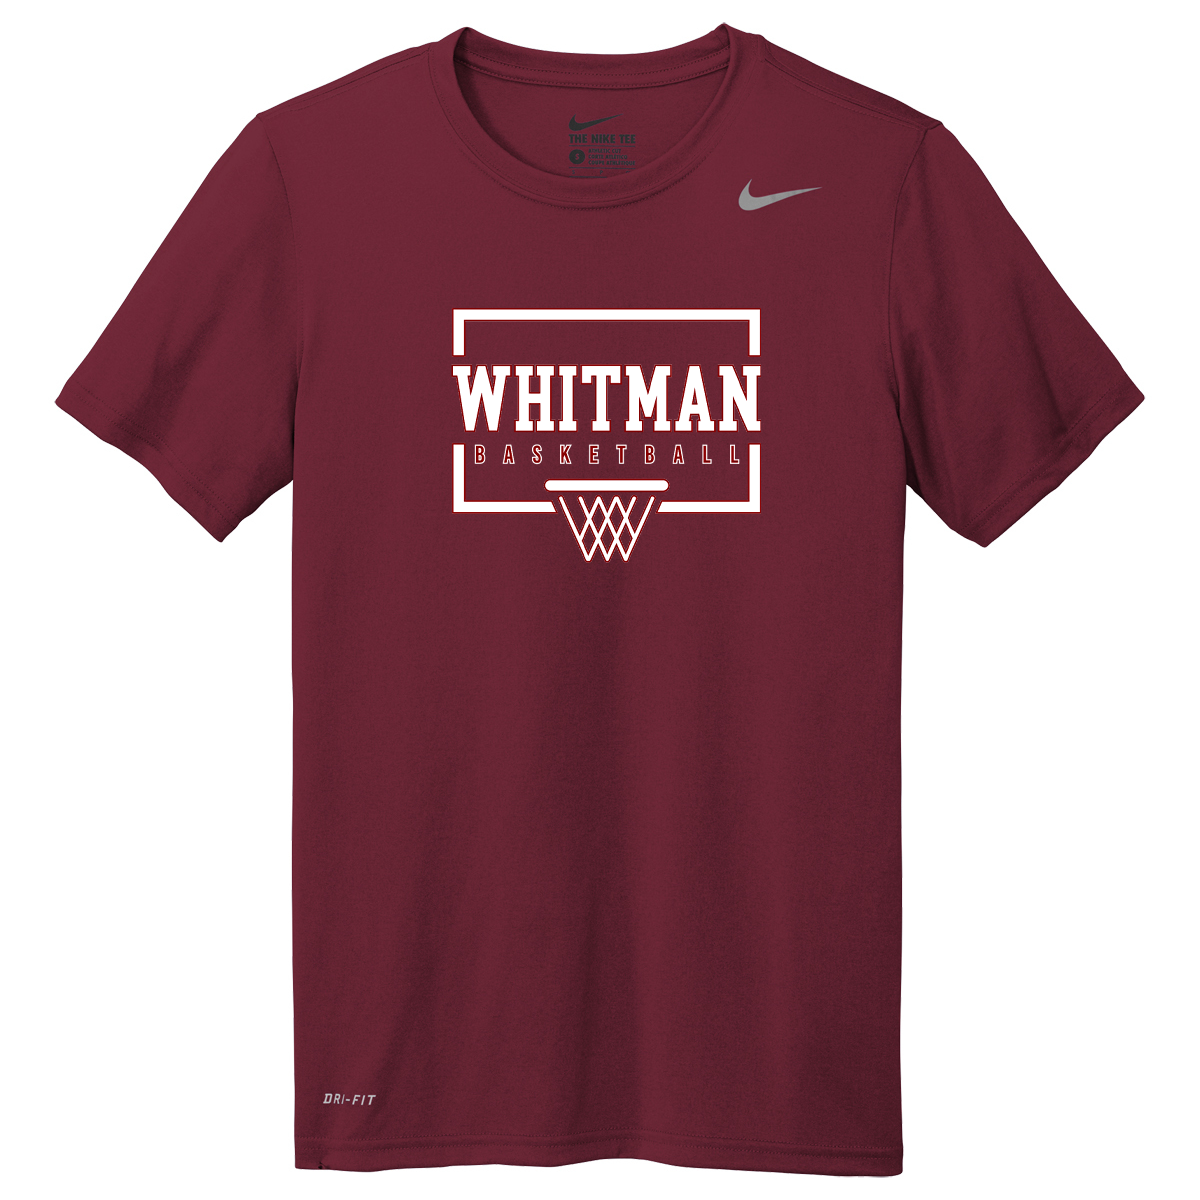 Whitman Women's Basketball Nike Legend Tee